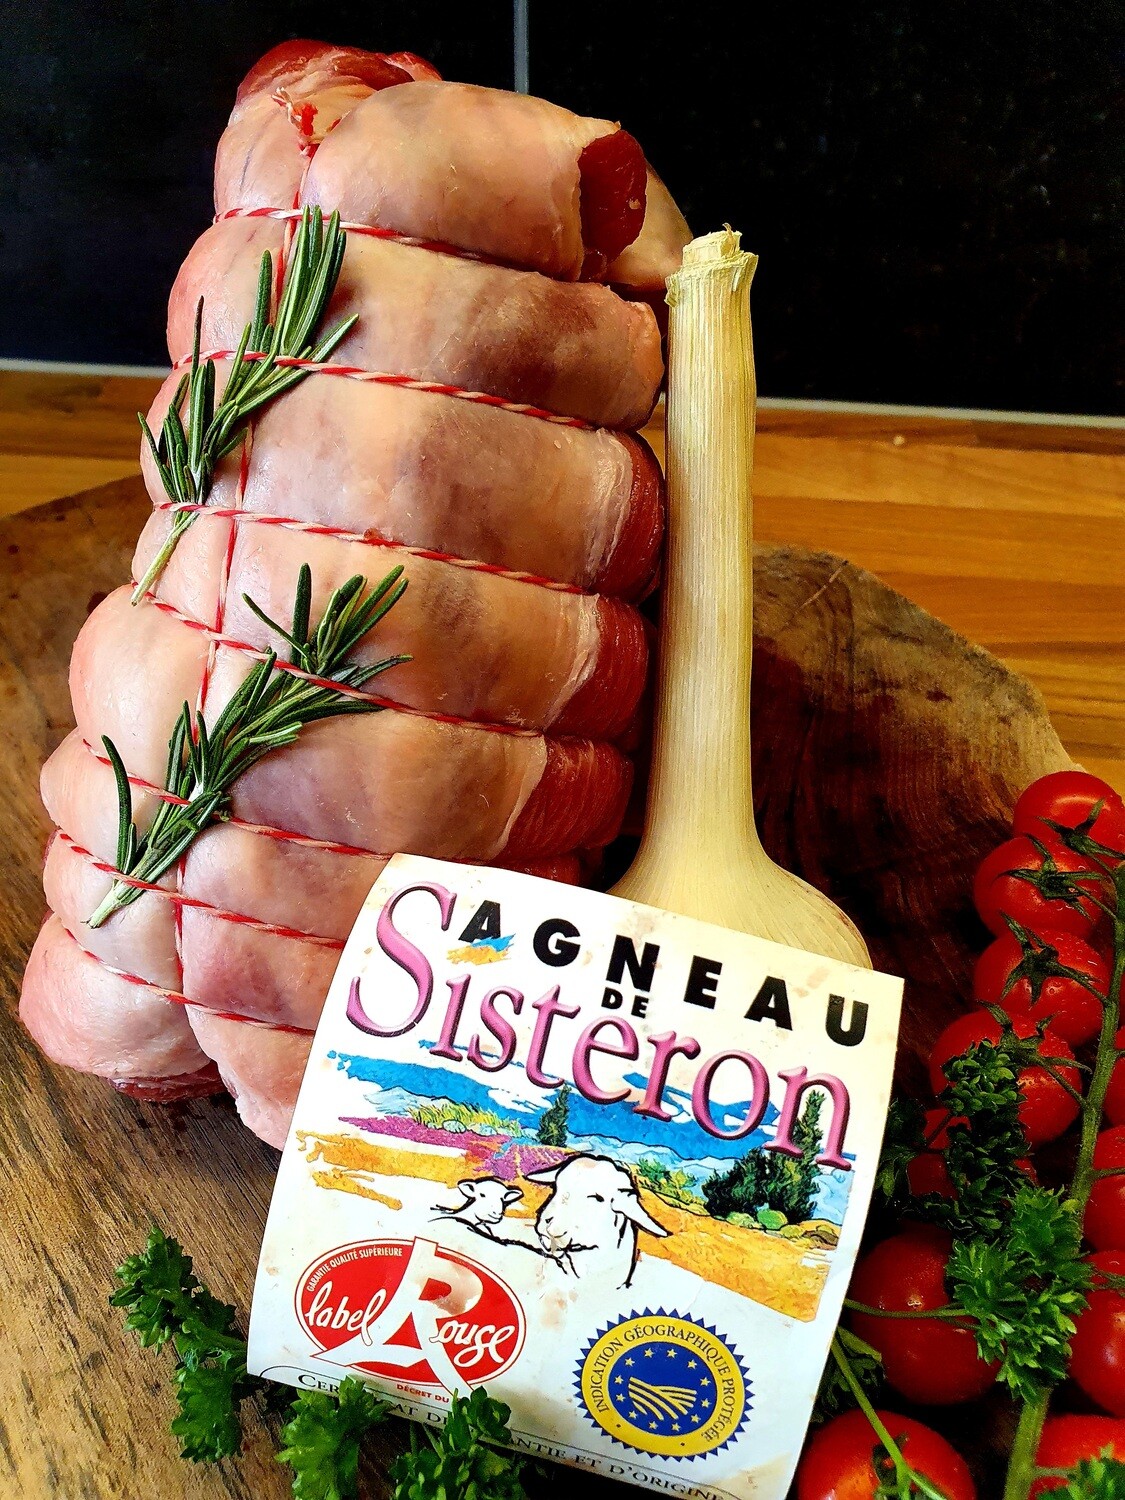 Boneless leg of lamb from Sisteron (France)